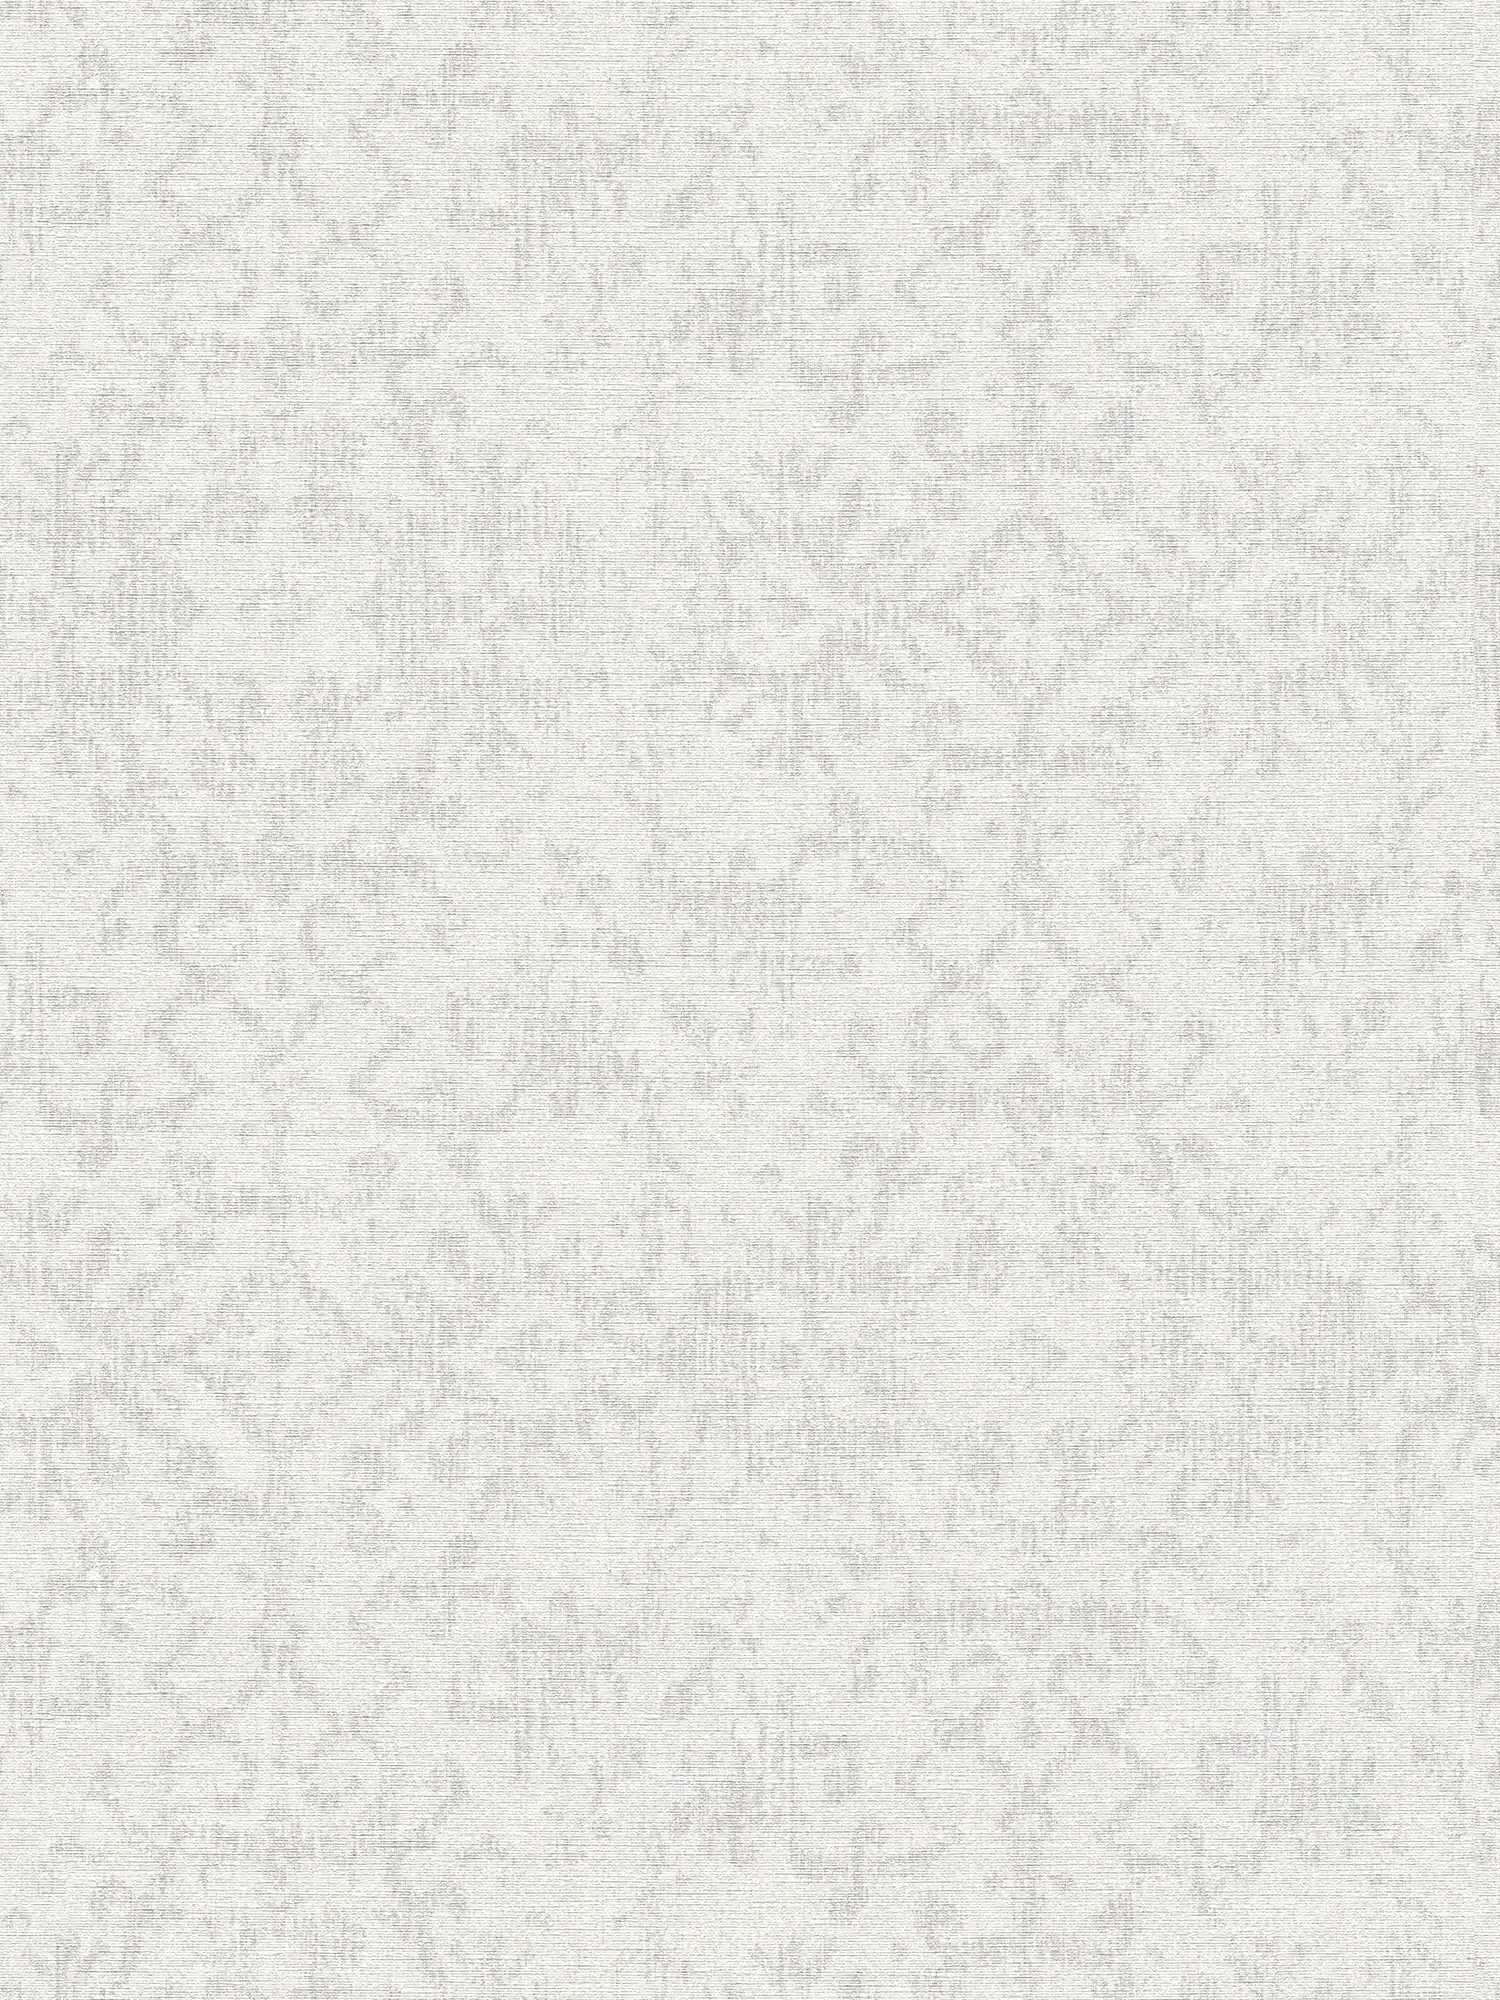 Ethno wallpaper grey with textile optics ornament design
